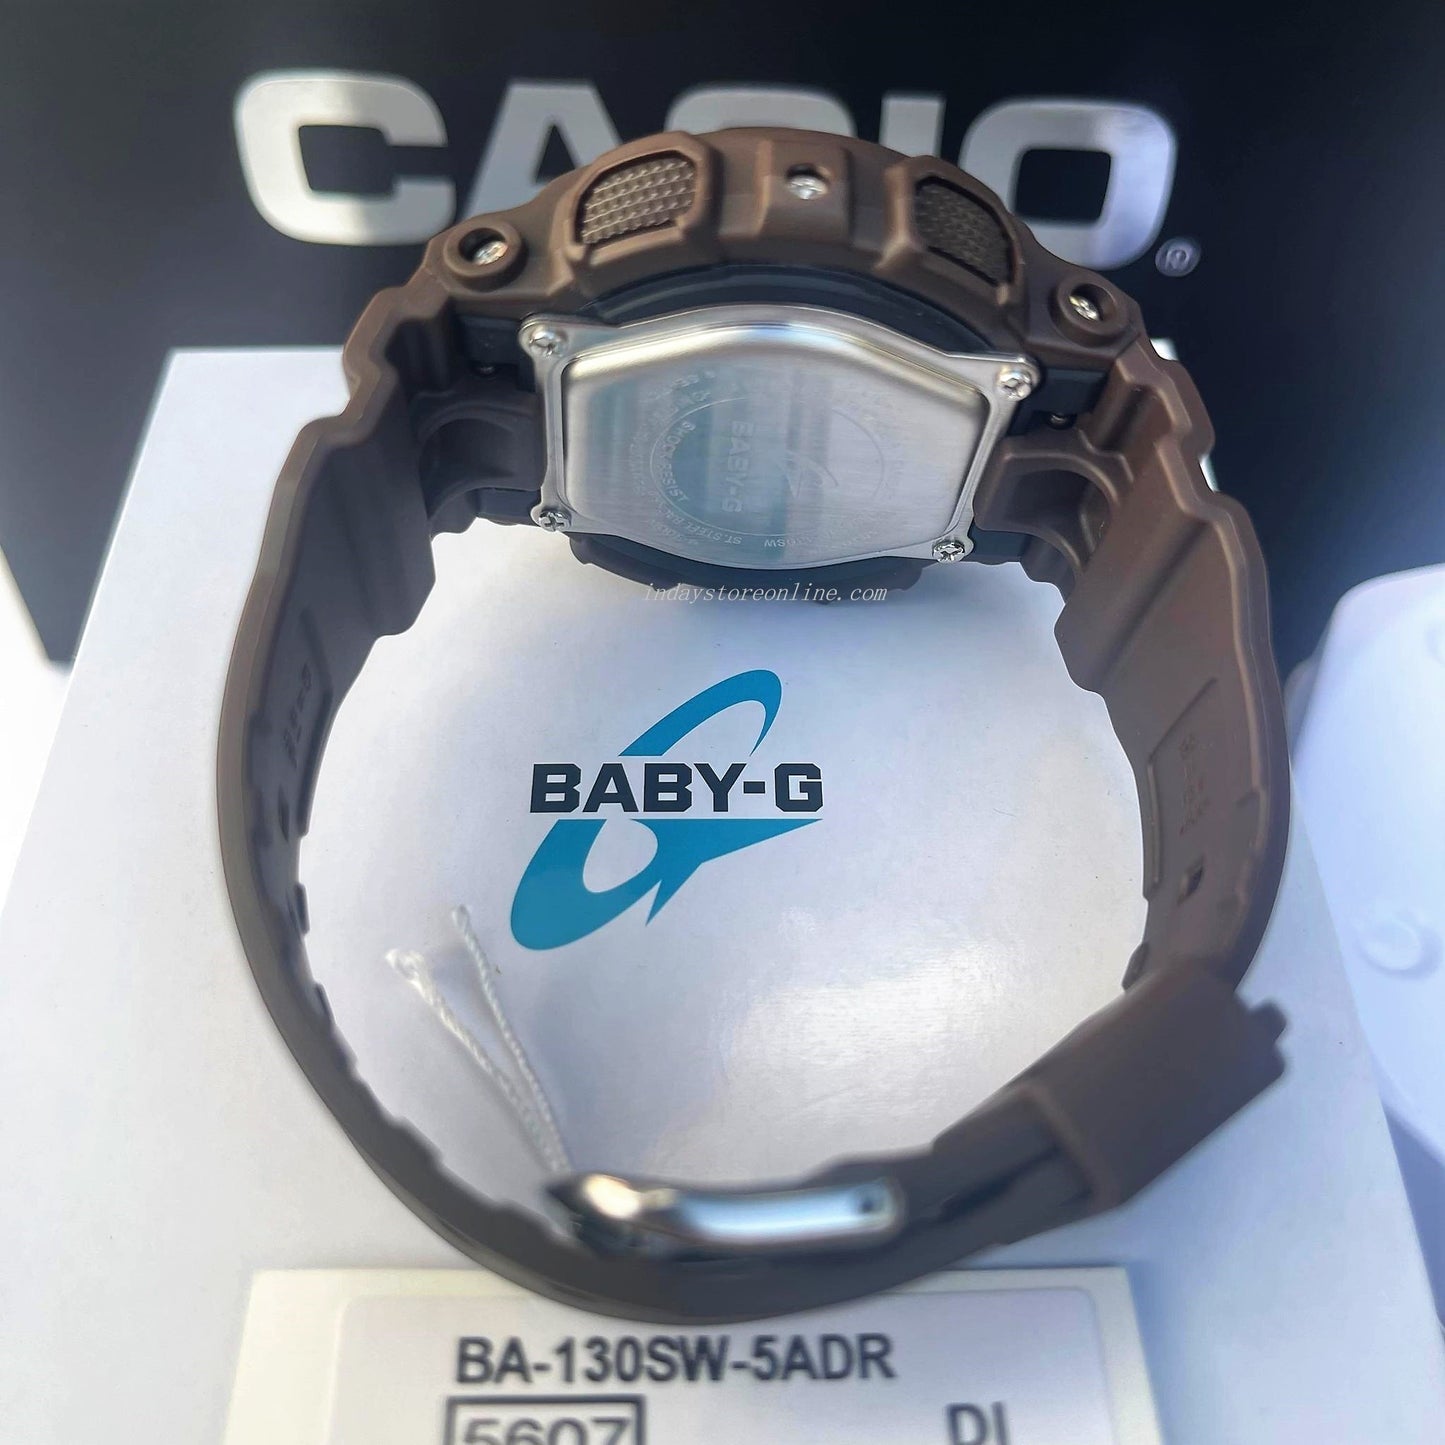 Casio Baby-G Women's Watch BA-130SW-5A